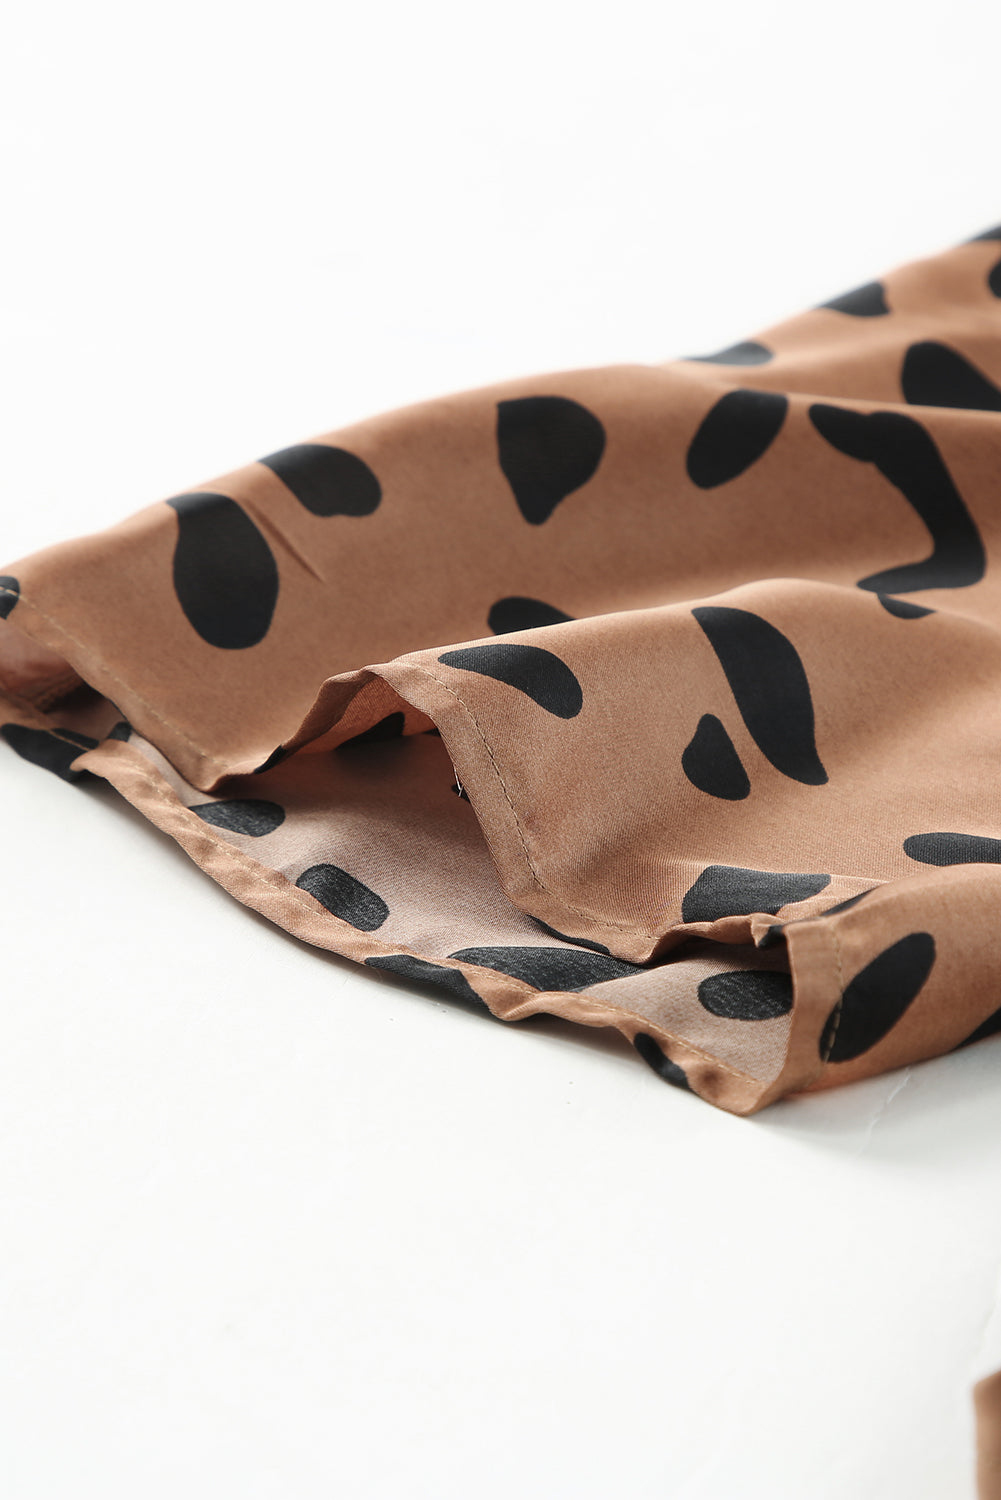 Peplum bluza s leopard printom V izreza